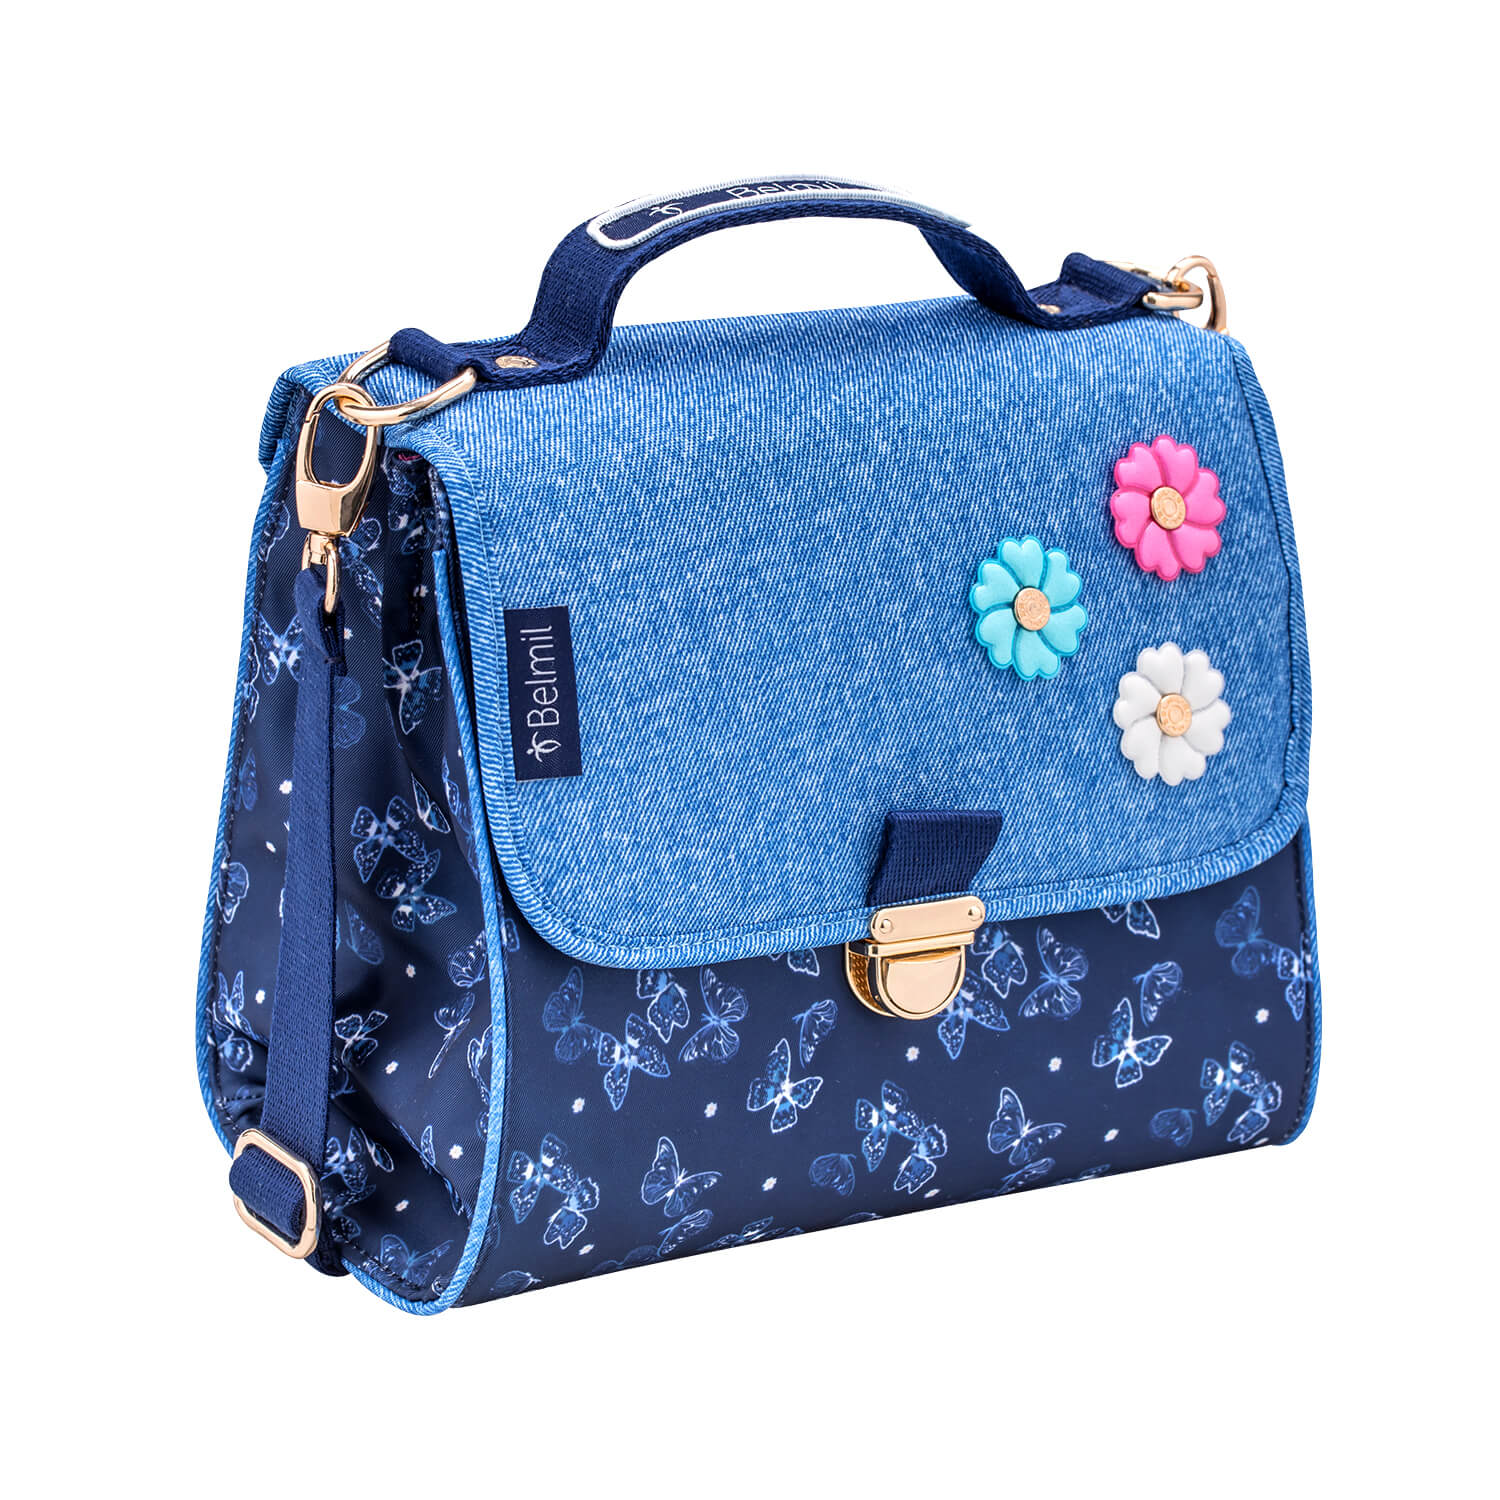 Premium Petite Shoulder bag Sapphire with GRATIS Gymbag